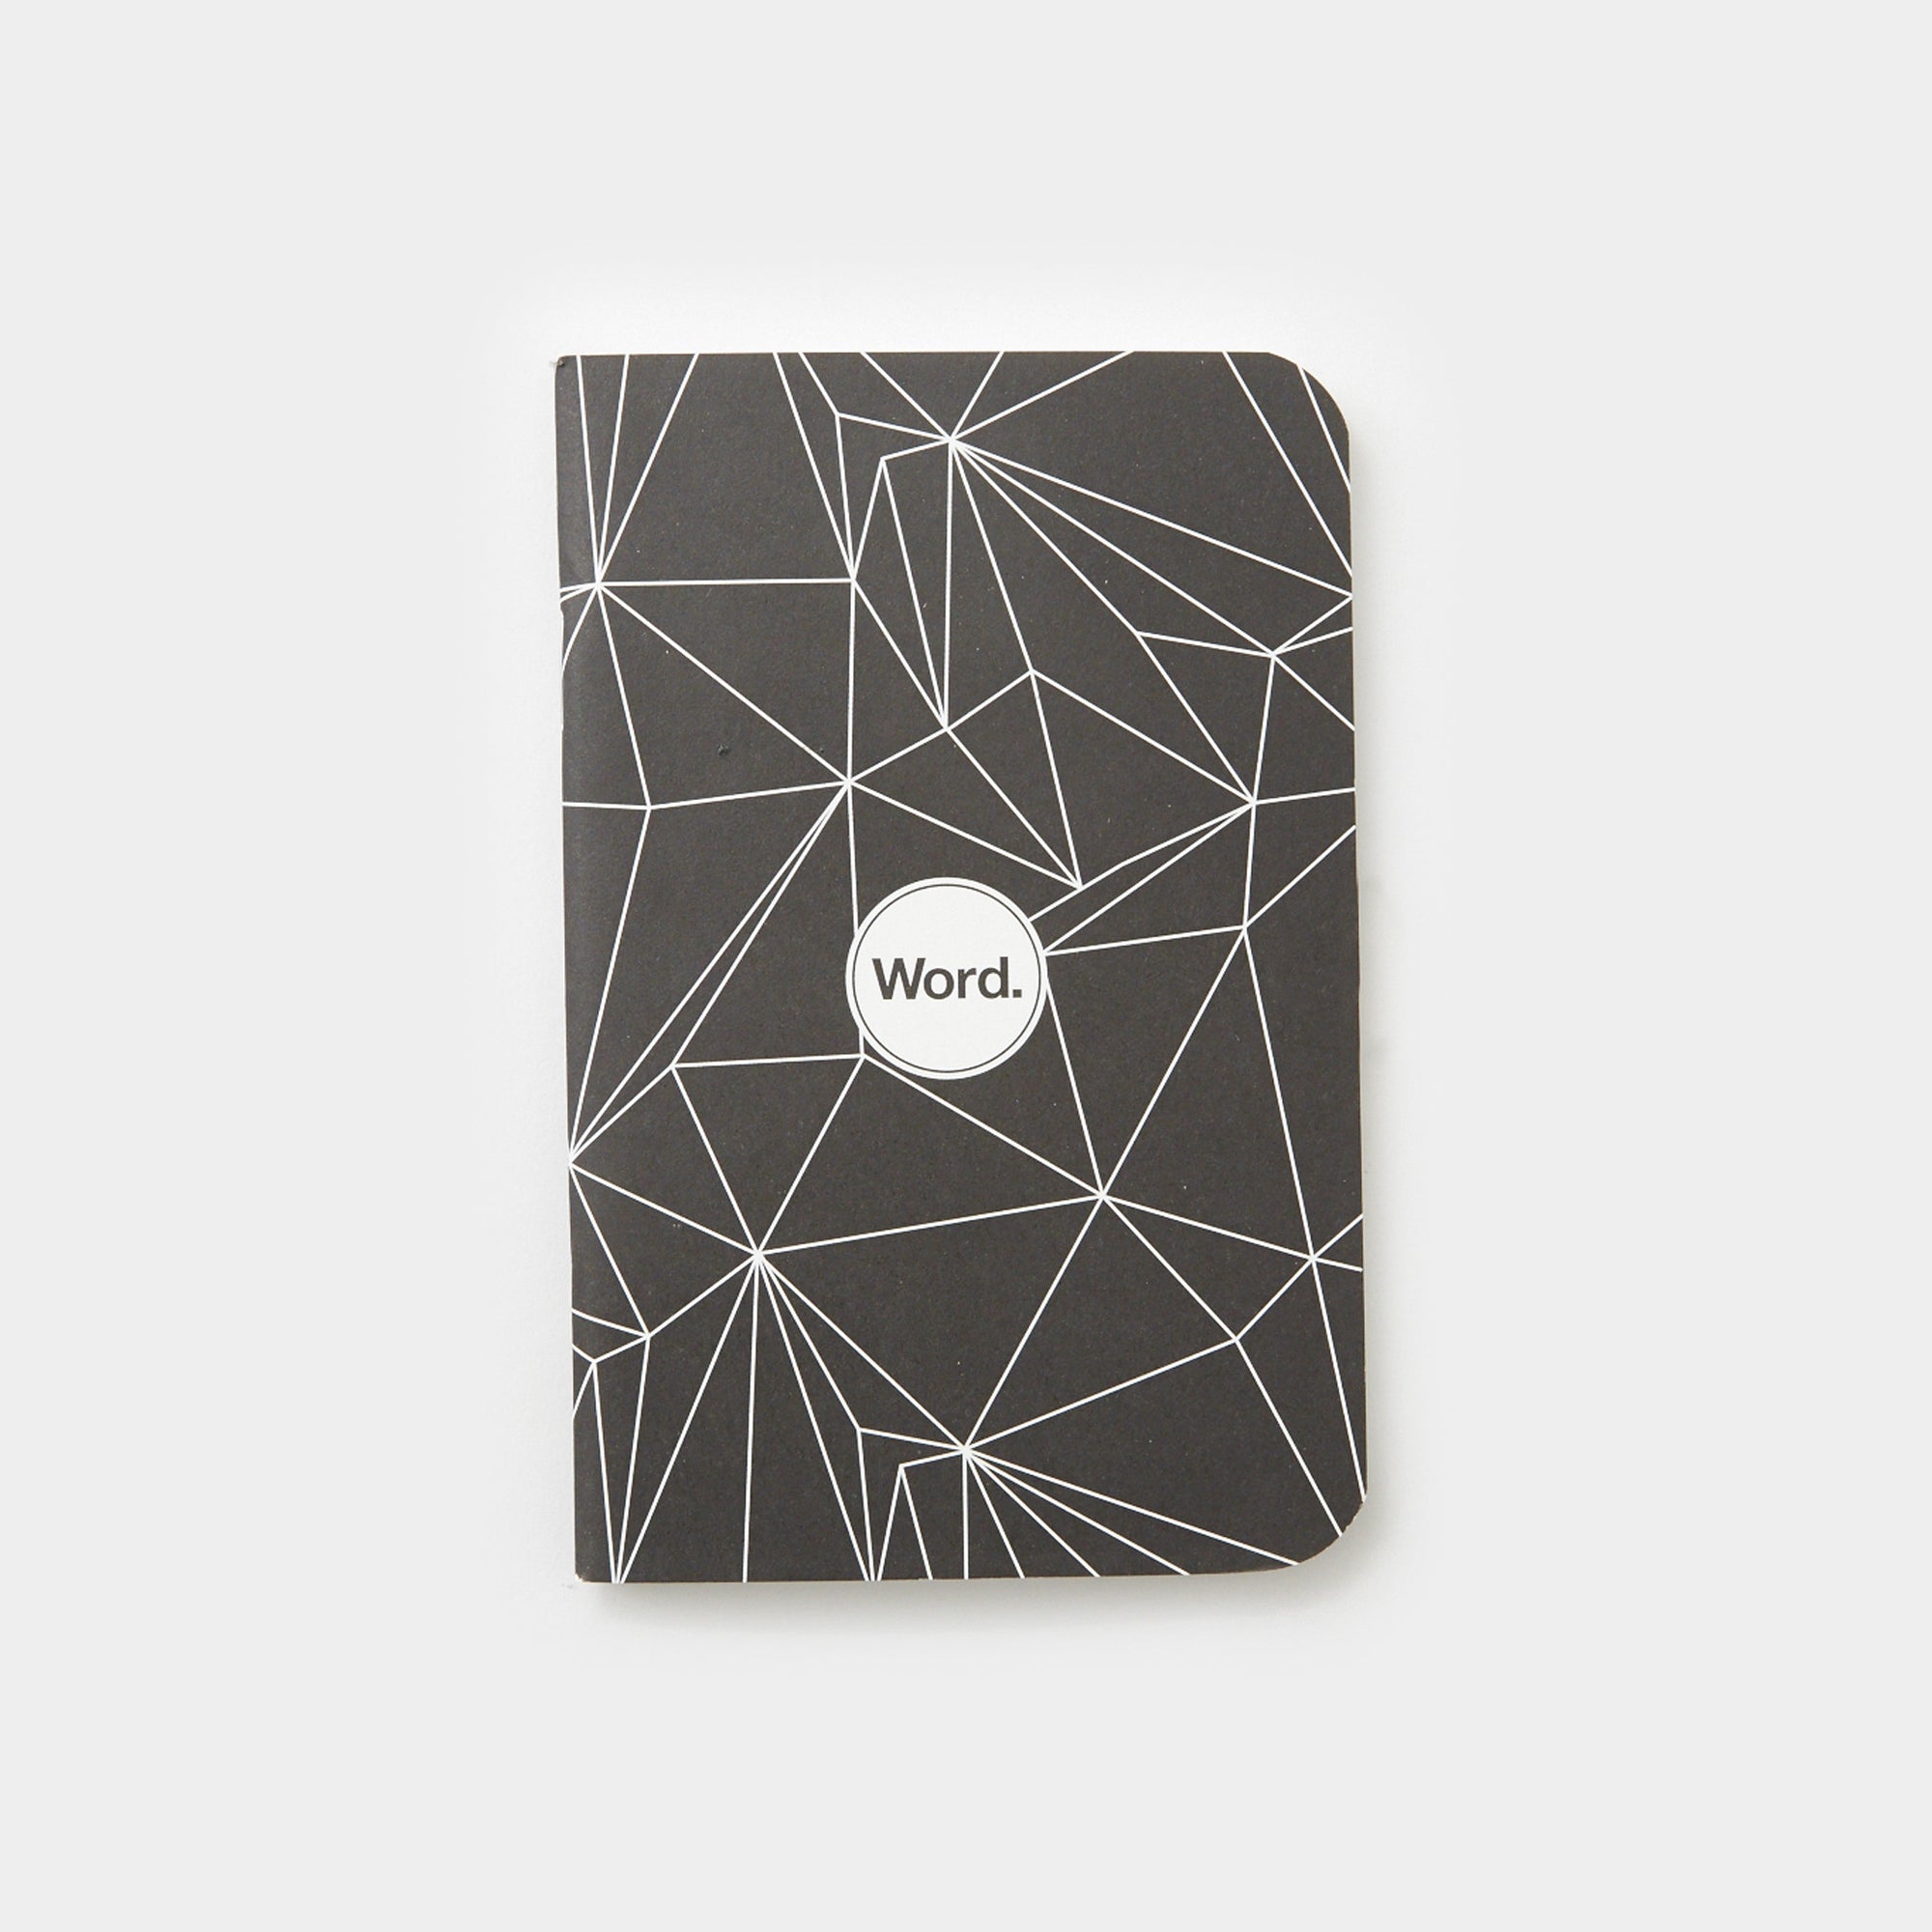 Word. Notebooks - Black Polygon (3 Pack)